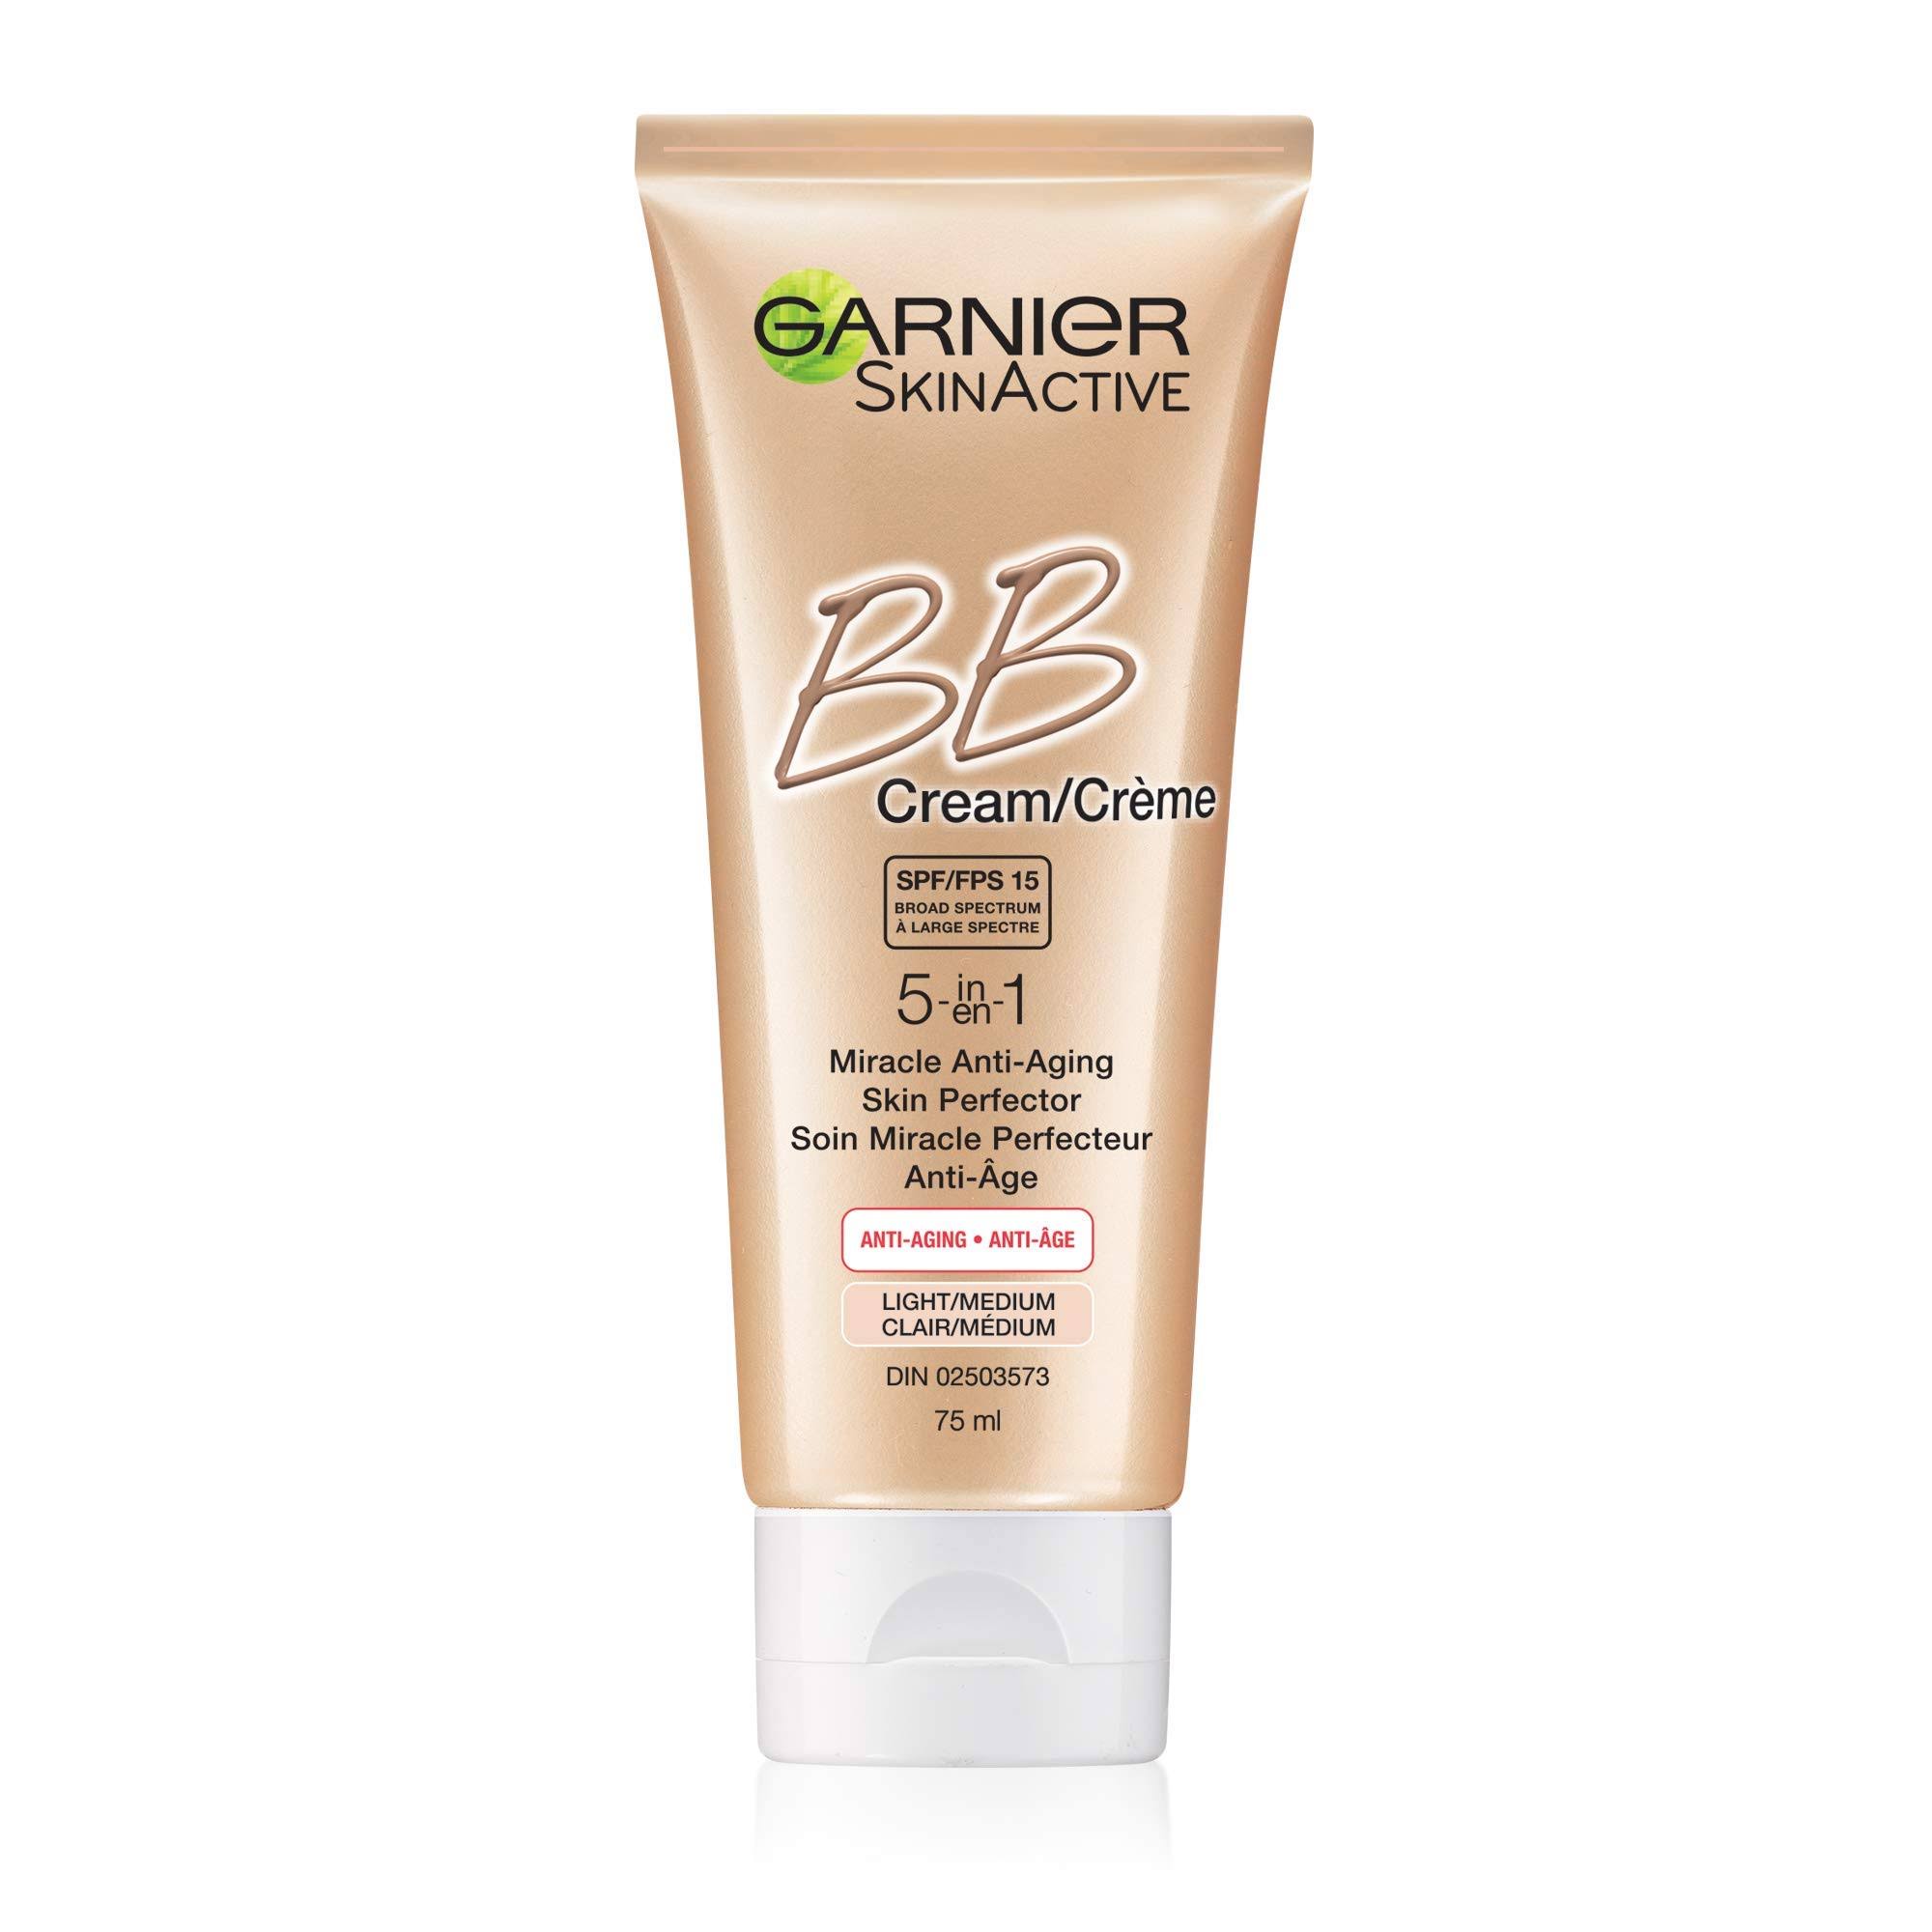 Garnier SkinActive Light/Medium Anti-Aging -5-in-1 Miracle Skin Perfector BB Cream - 75 ml